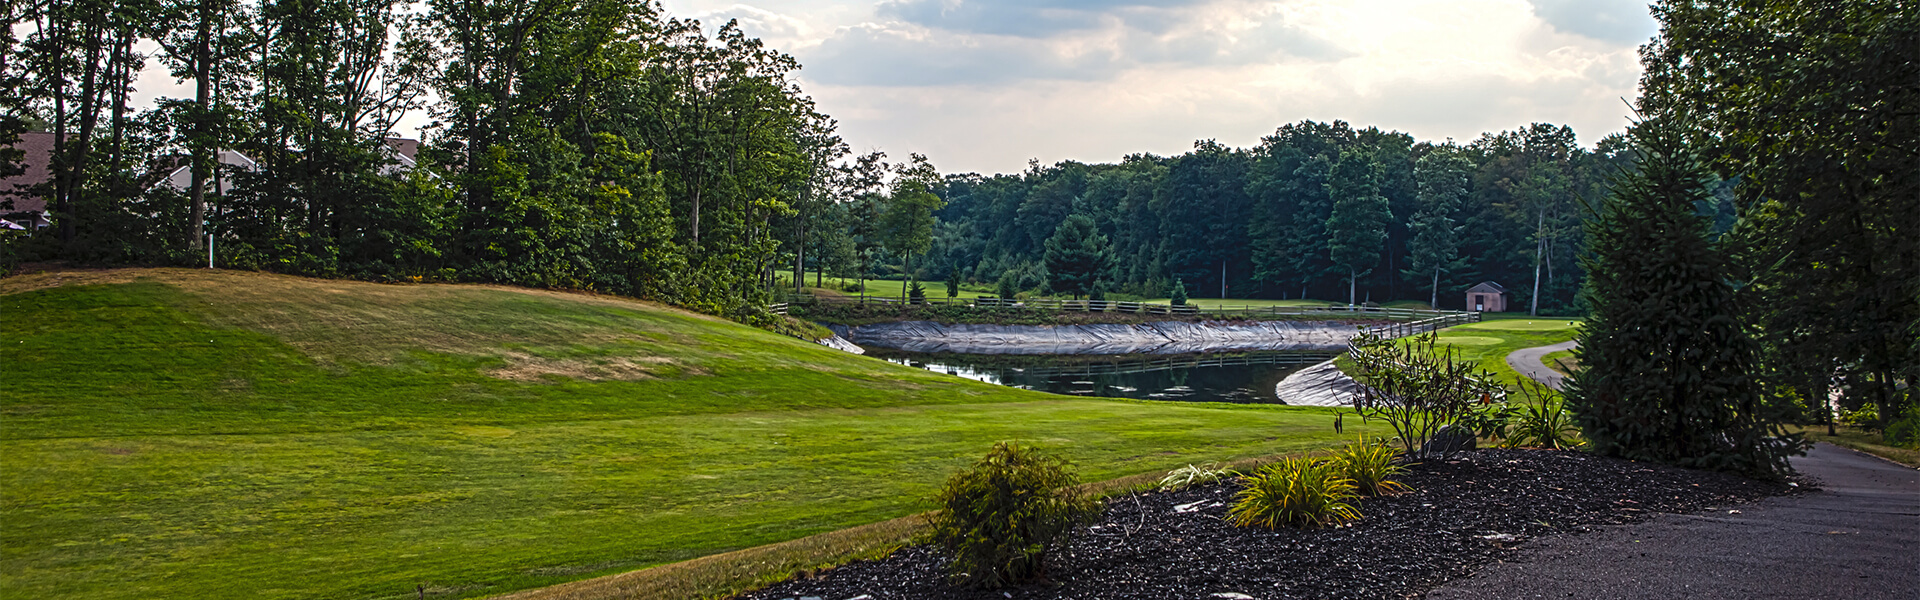 golf course green pond